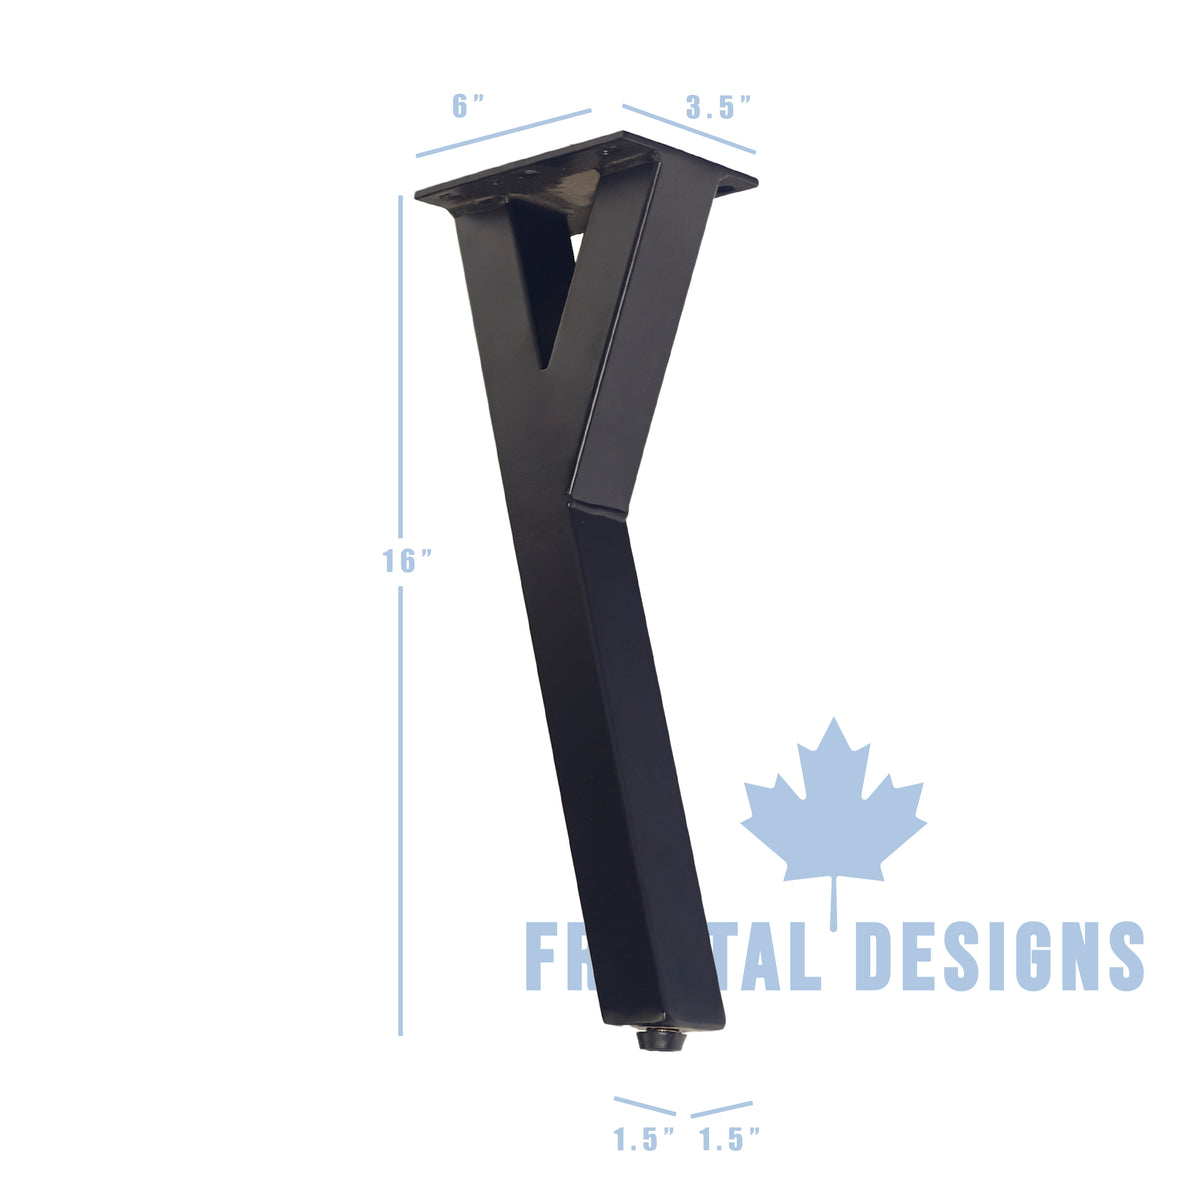 All Table Legs & Hardware — Fractal Designs Inc